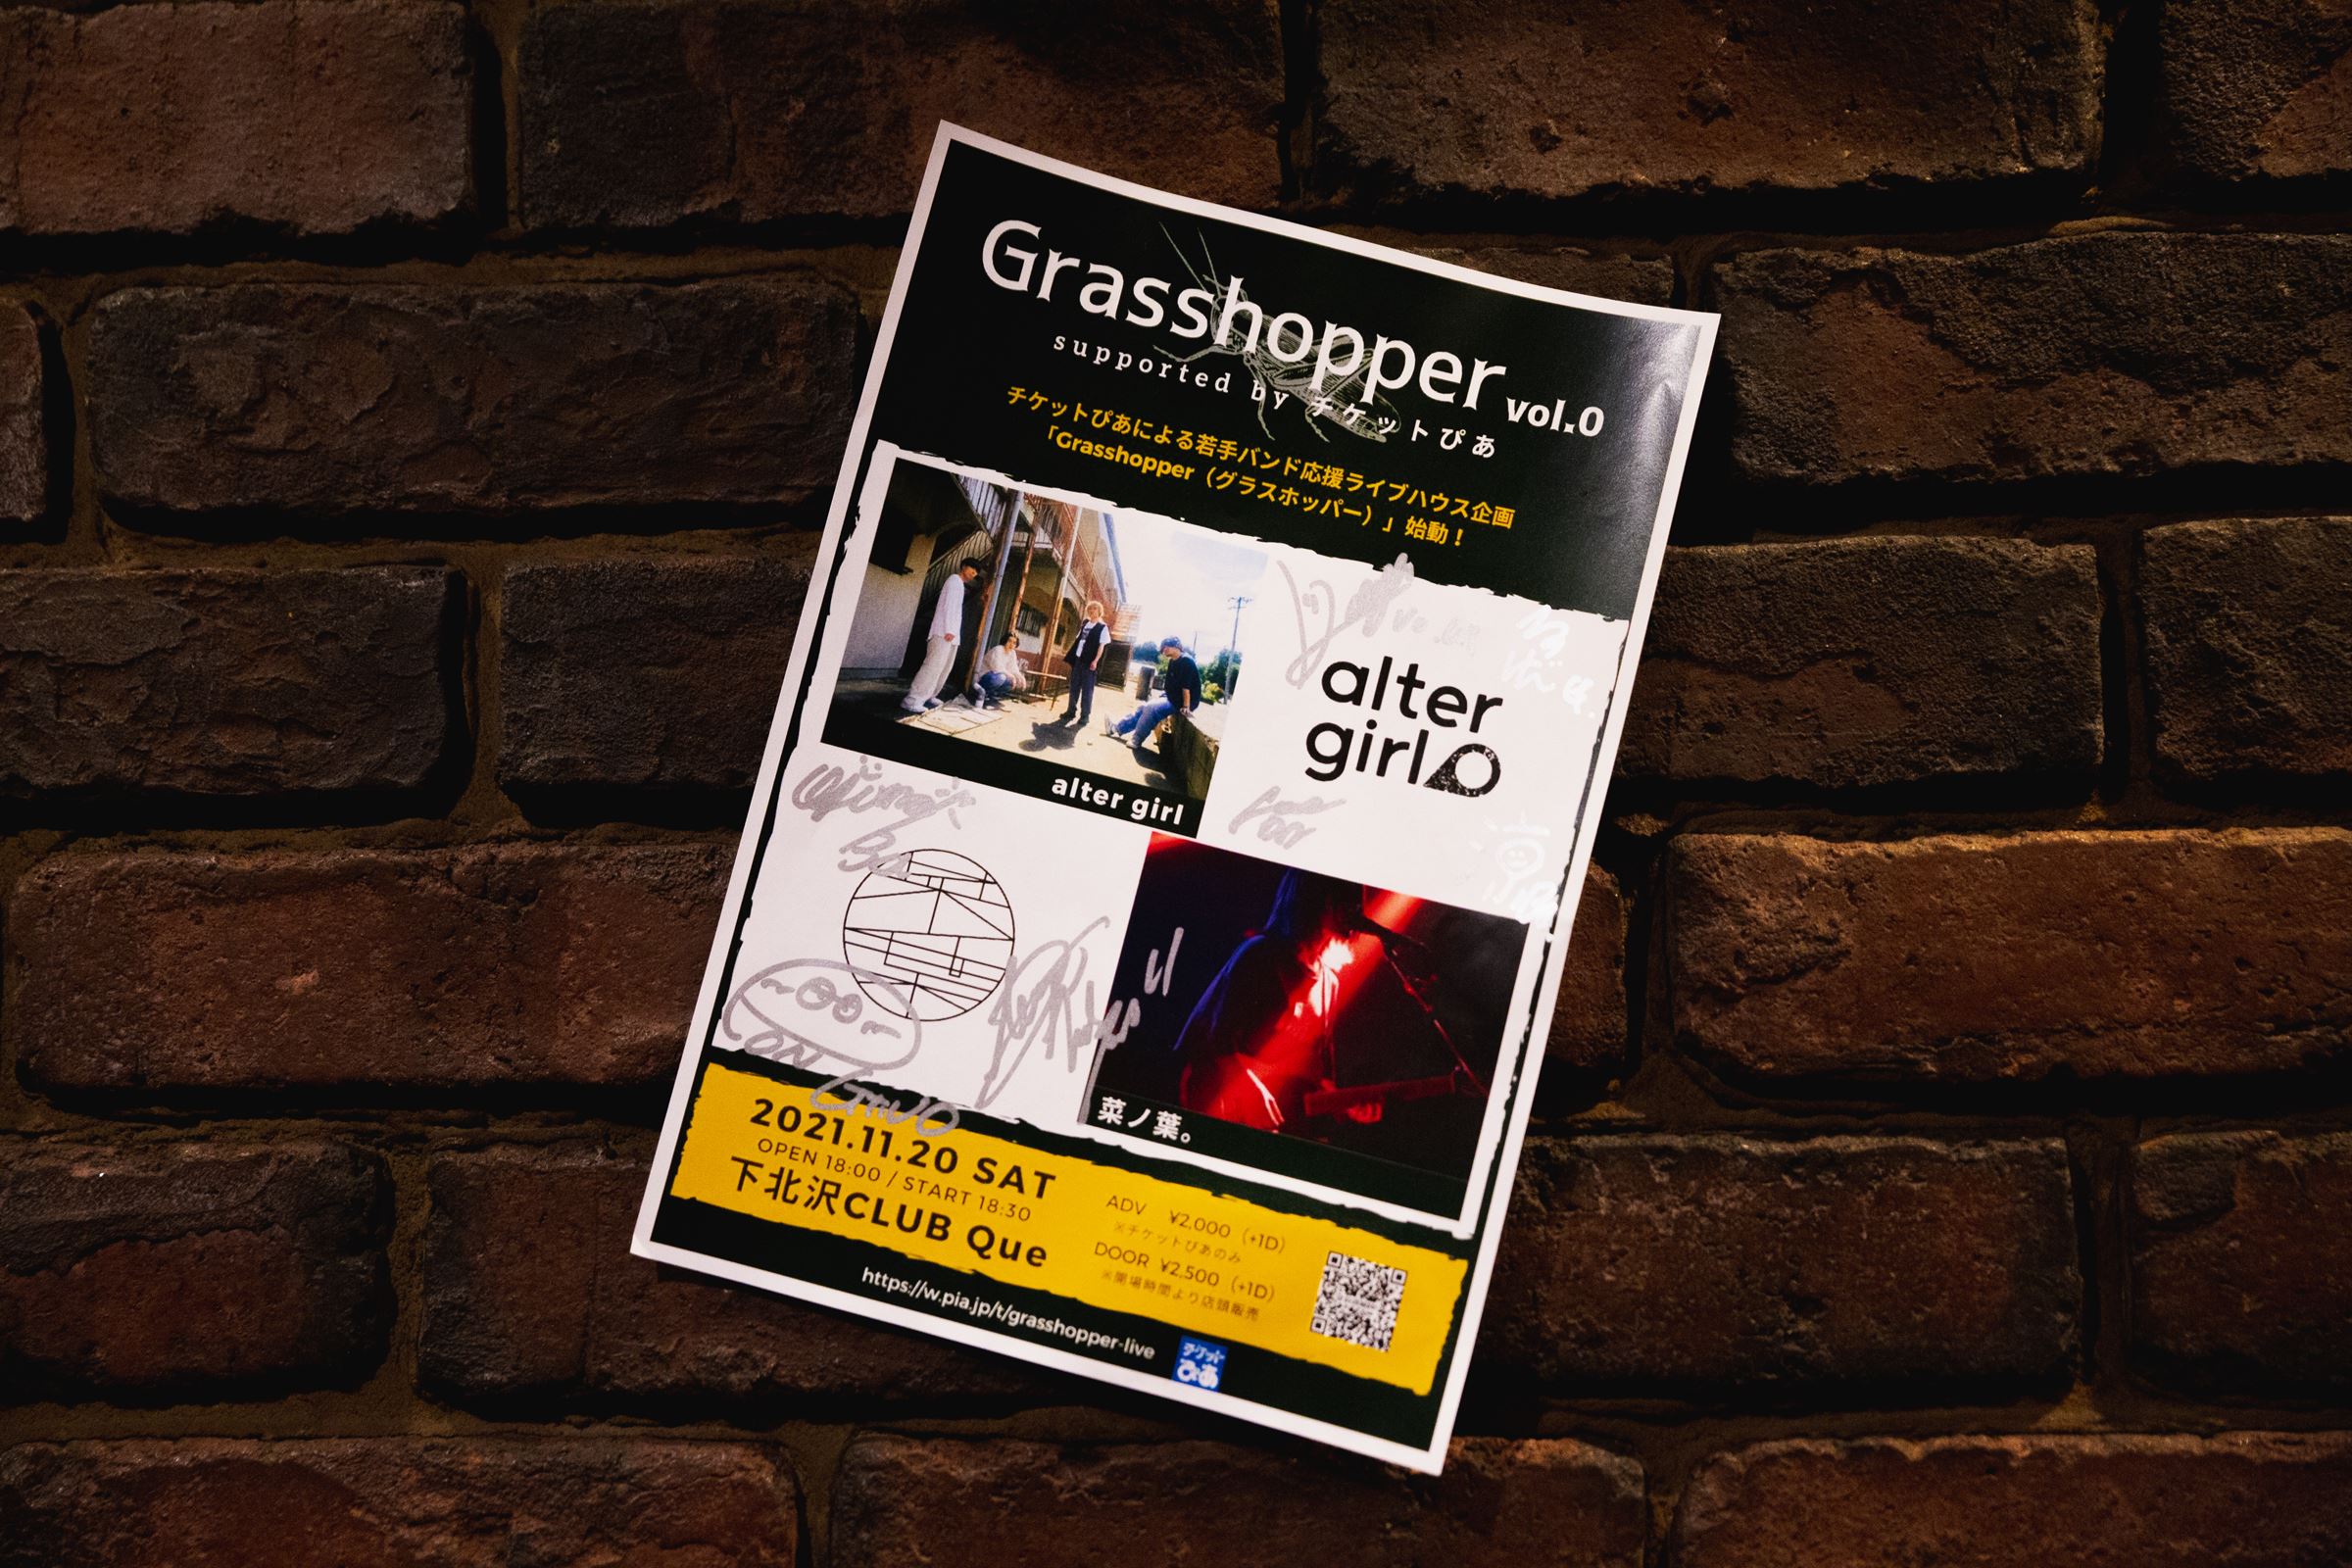 「Grasshopper vol.0 suppoted by チケットぴあ」 （Photo by Nanami Shinkai）